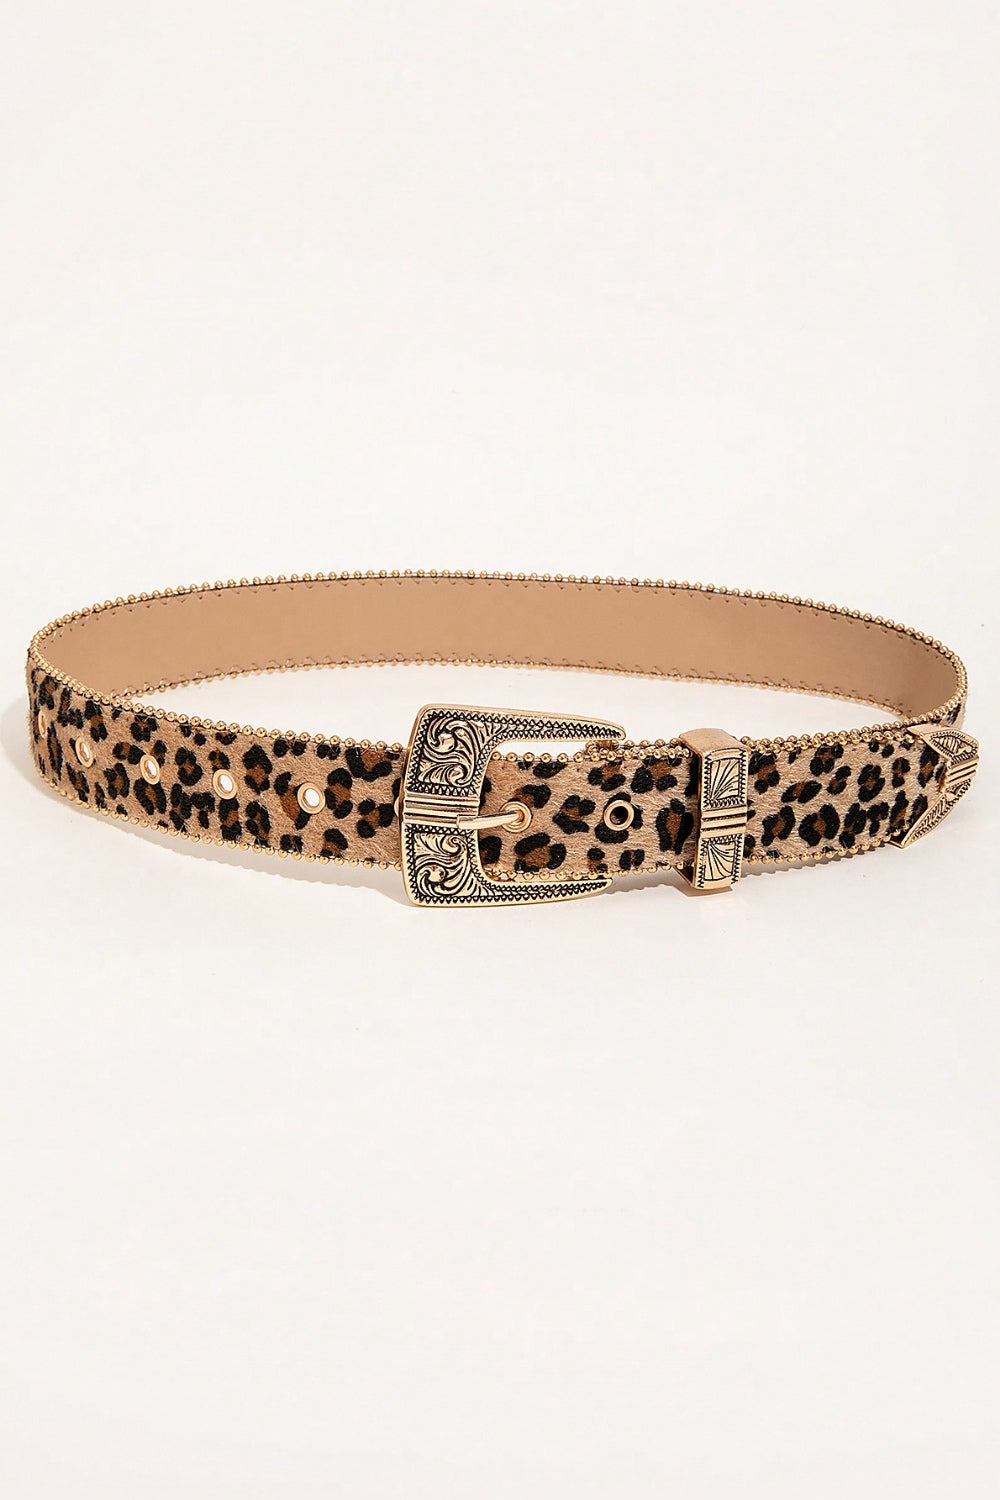 TEEK - Natural Chic Leopard PU Leather Belt BELT TEEK Trend   